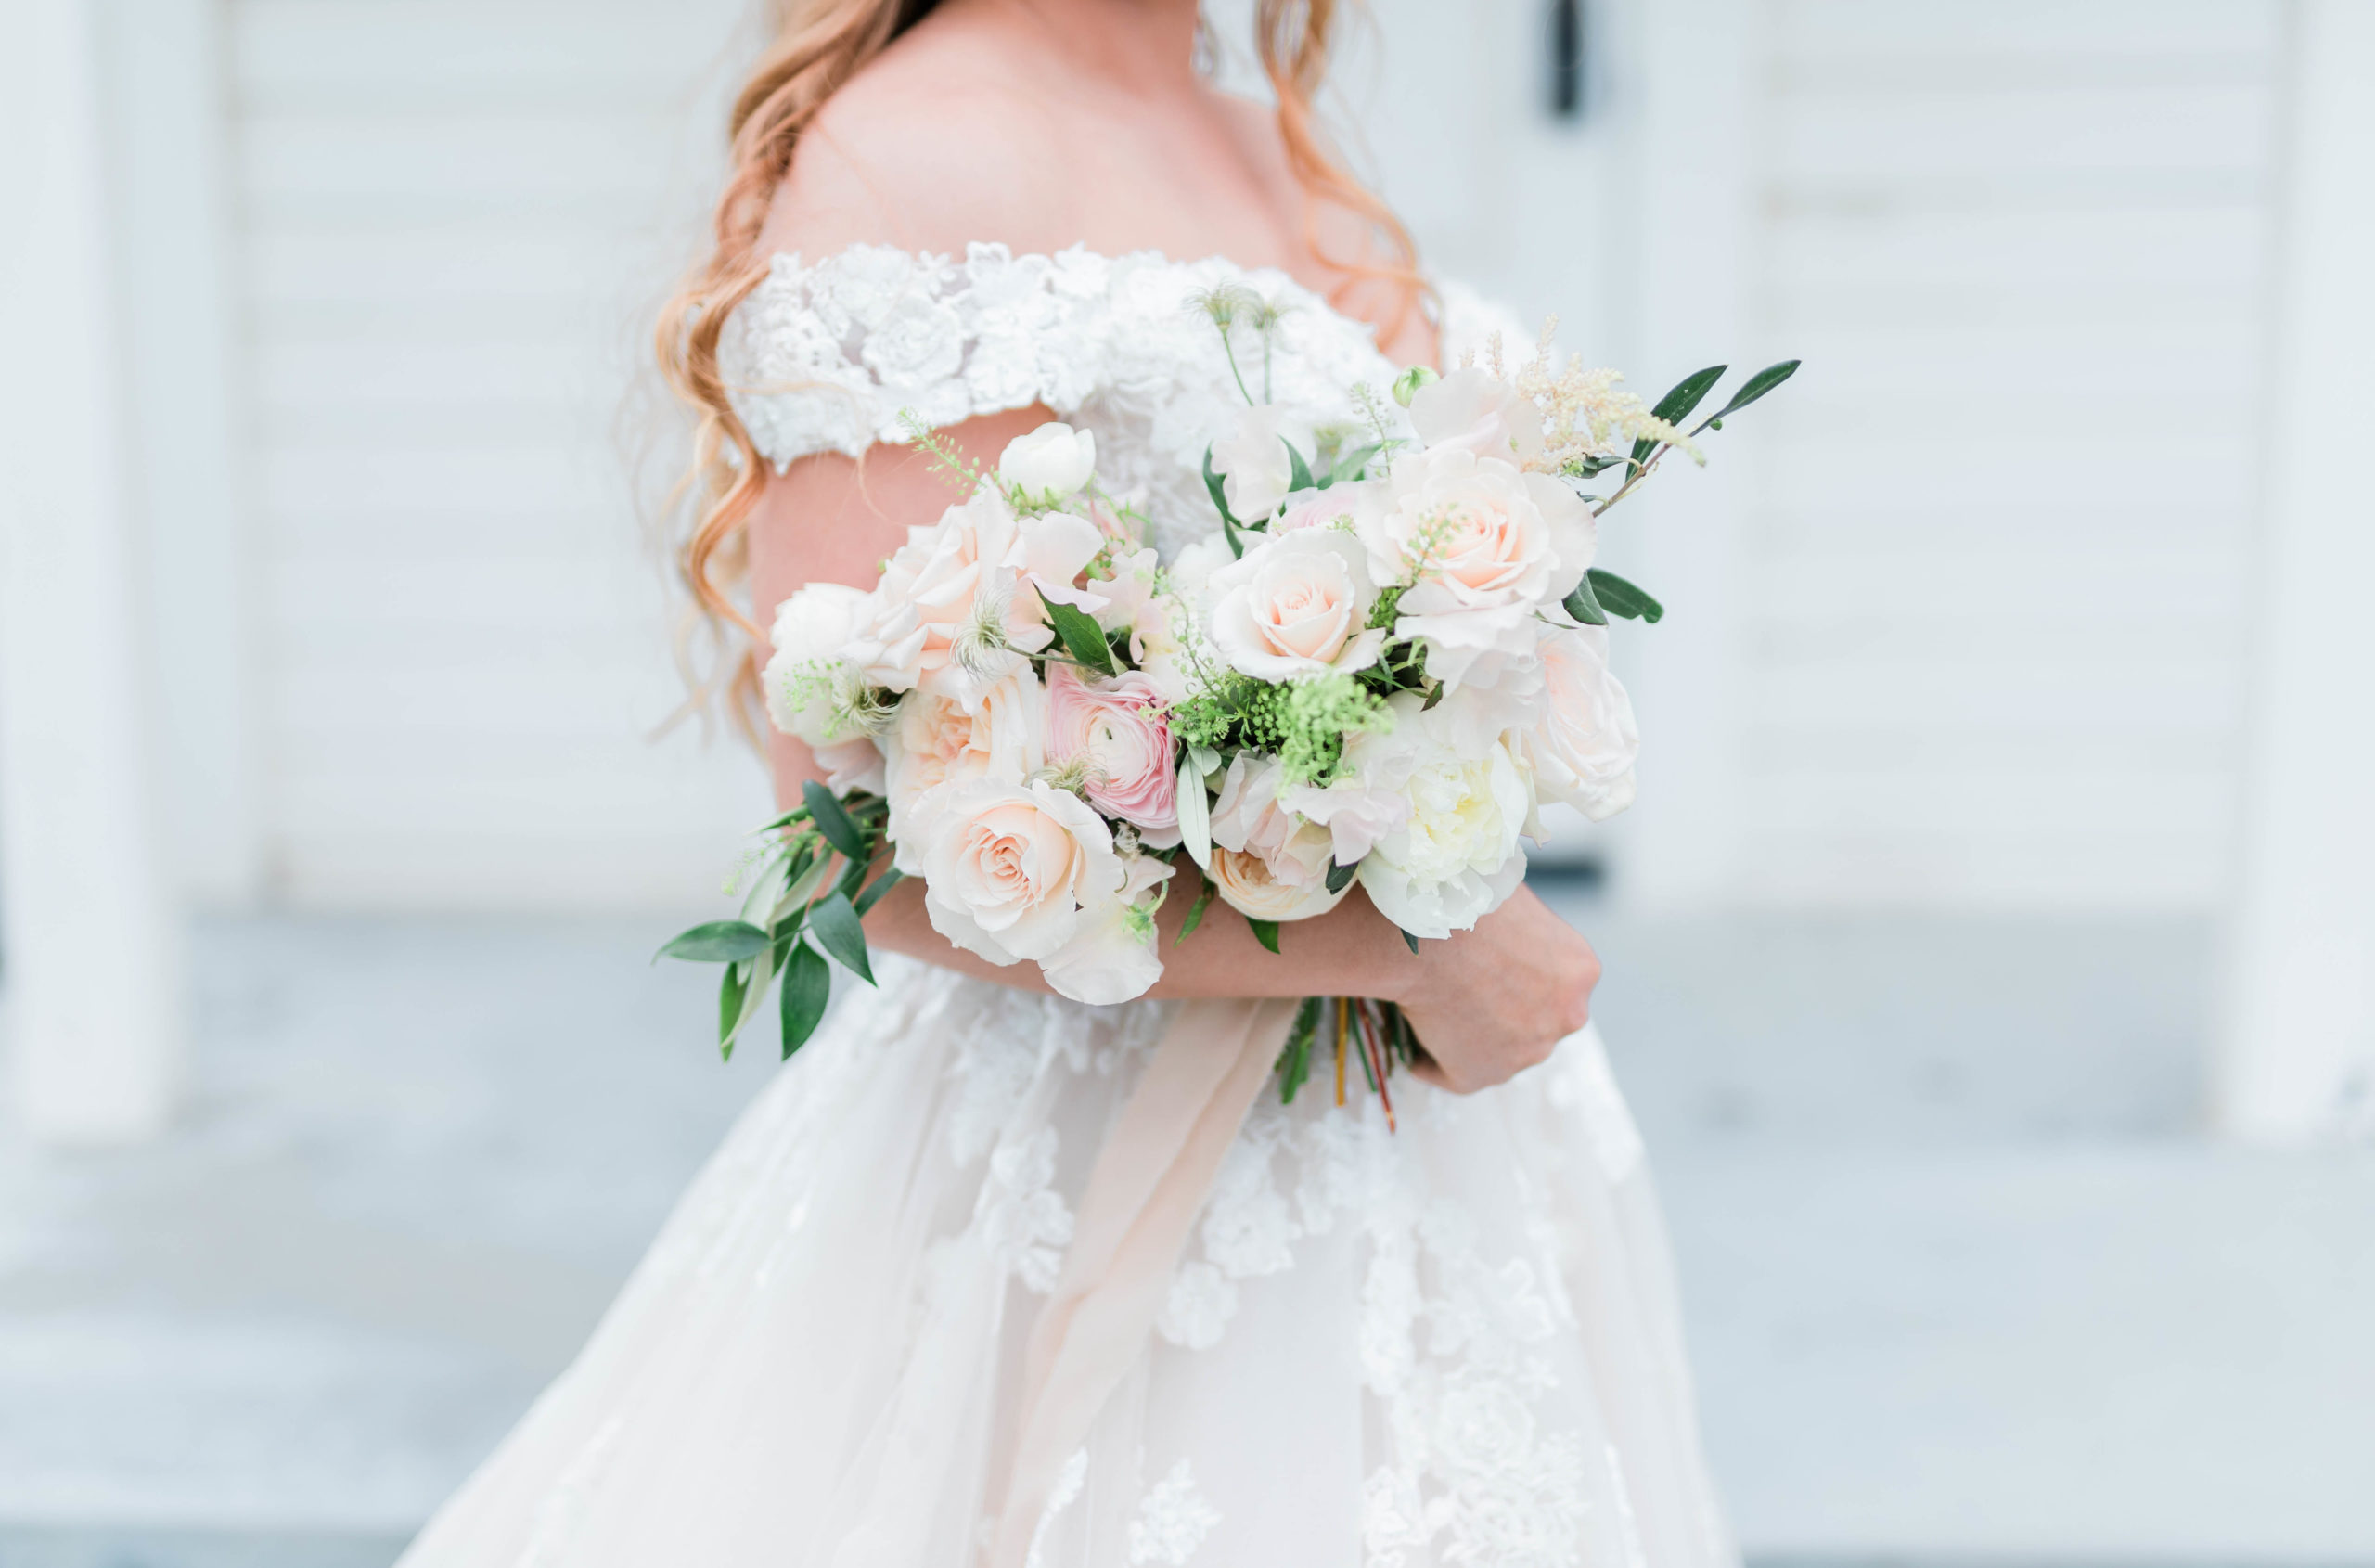 Boise wedding photographer captures bride holding her light pink rose bouquet